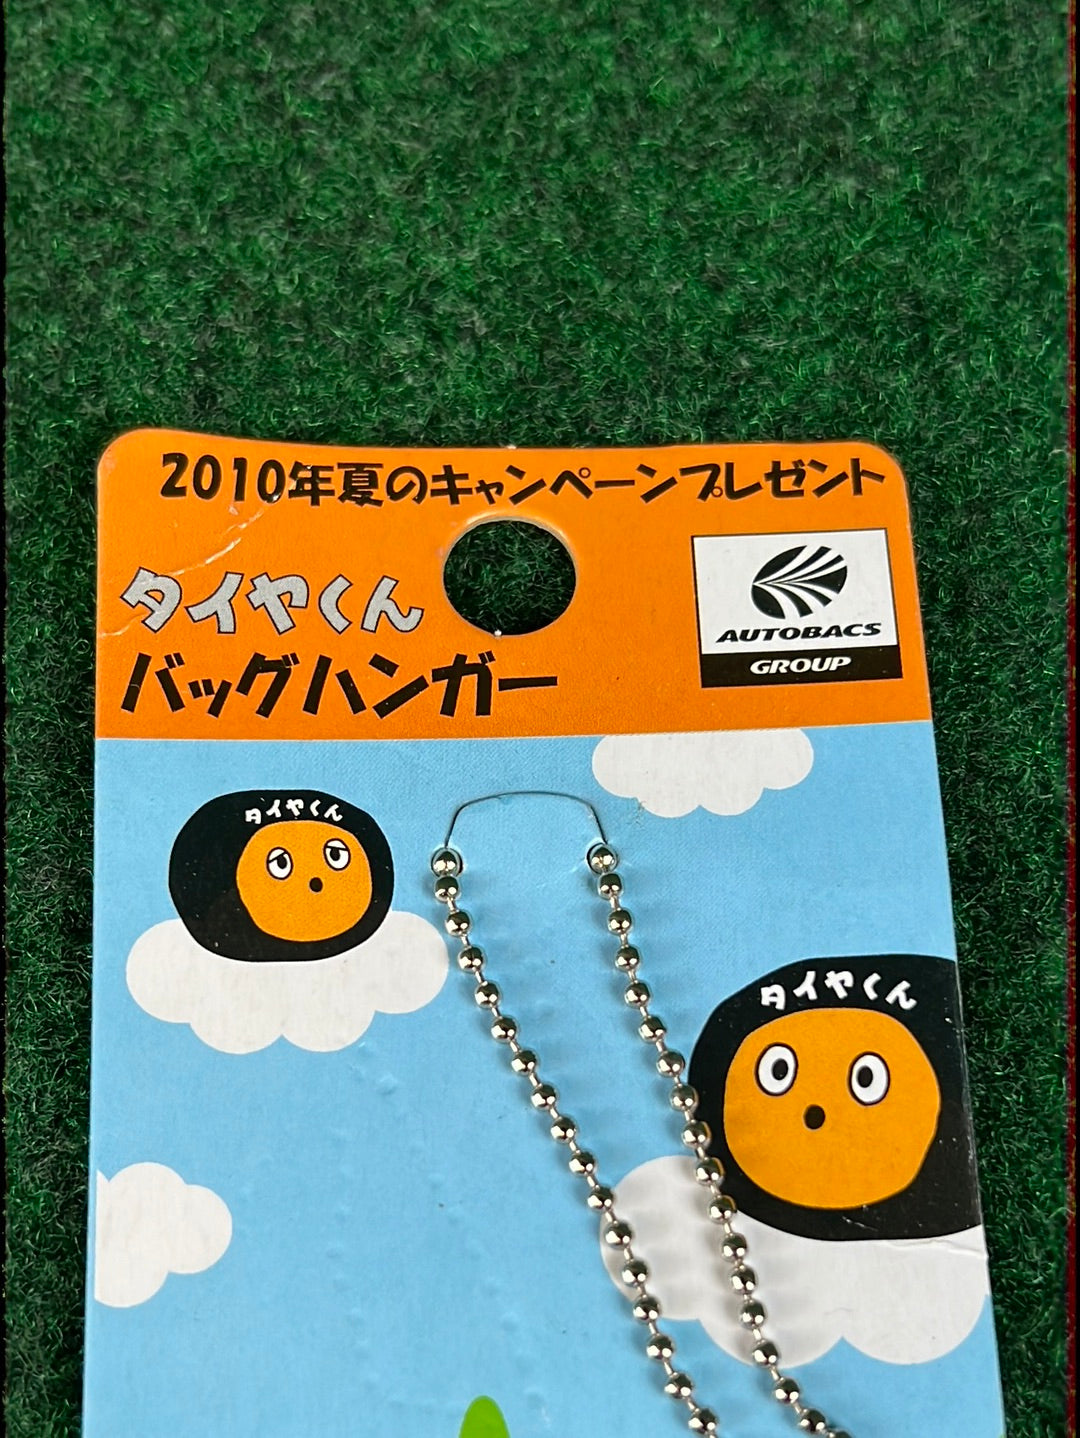 Autobacs - Bag Hanger / Keychain (2010)